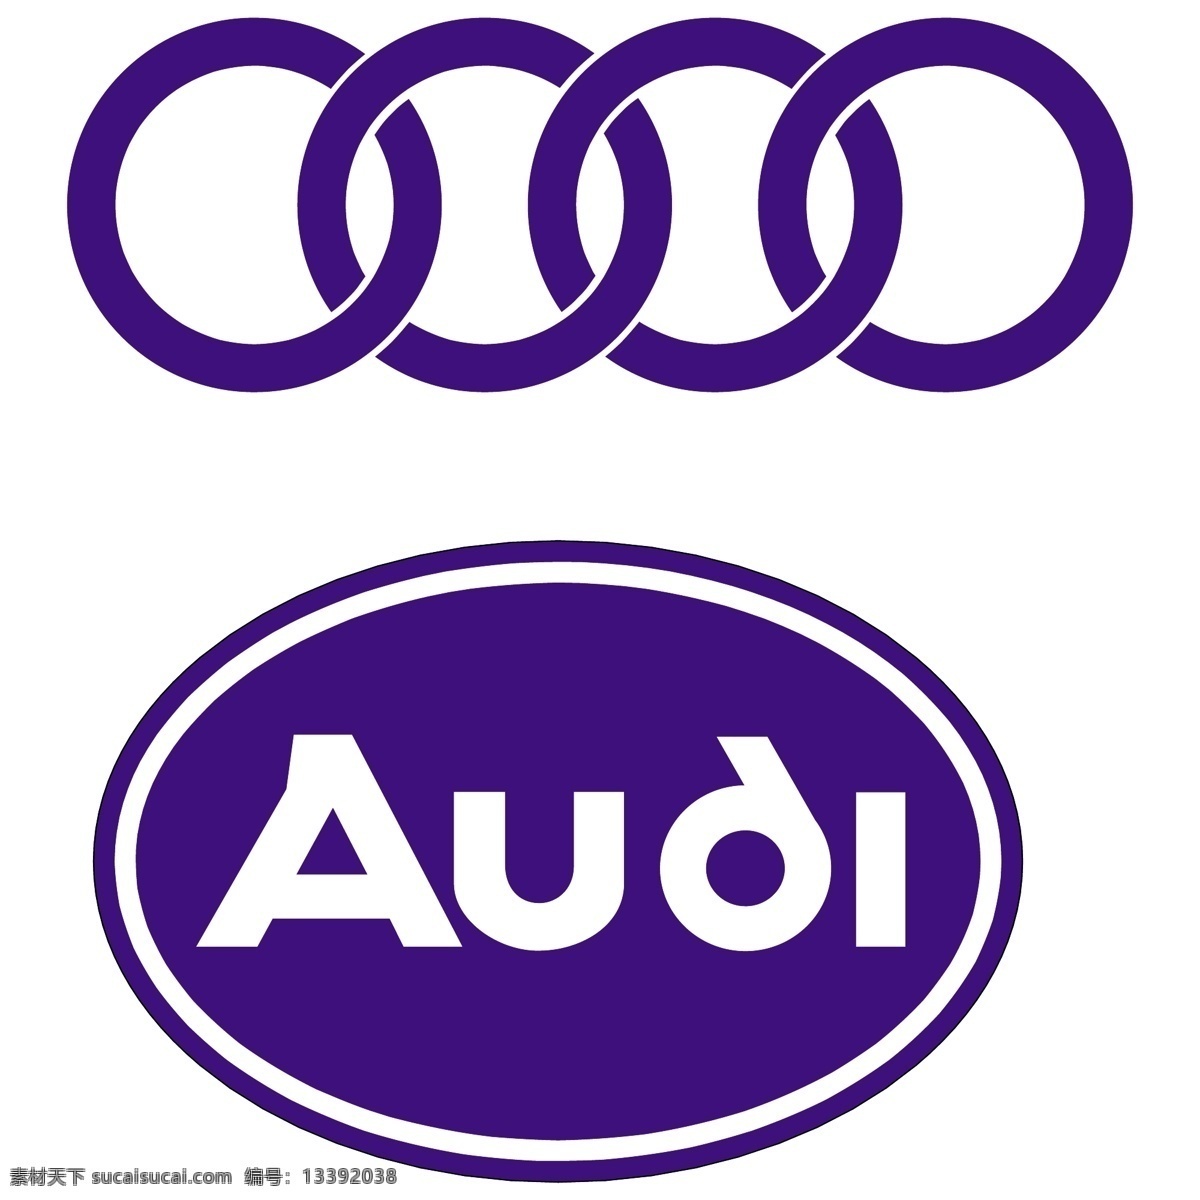 audi 奥迪 logo 标识标志图标 企业 标志 世界 汽车行业 大全 系列 矢量图库